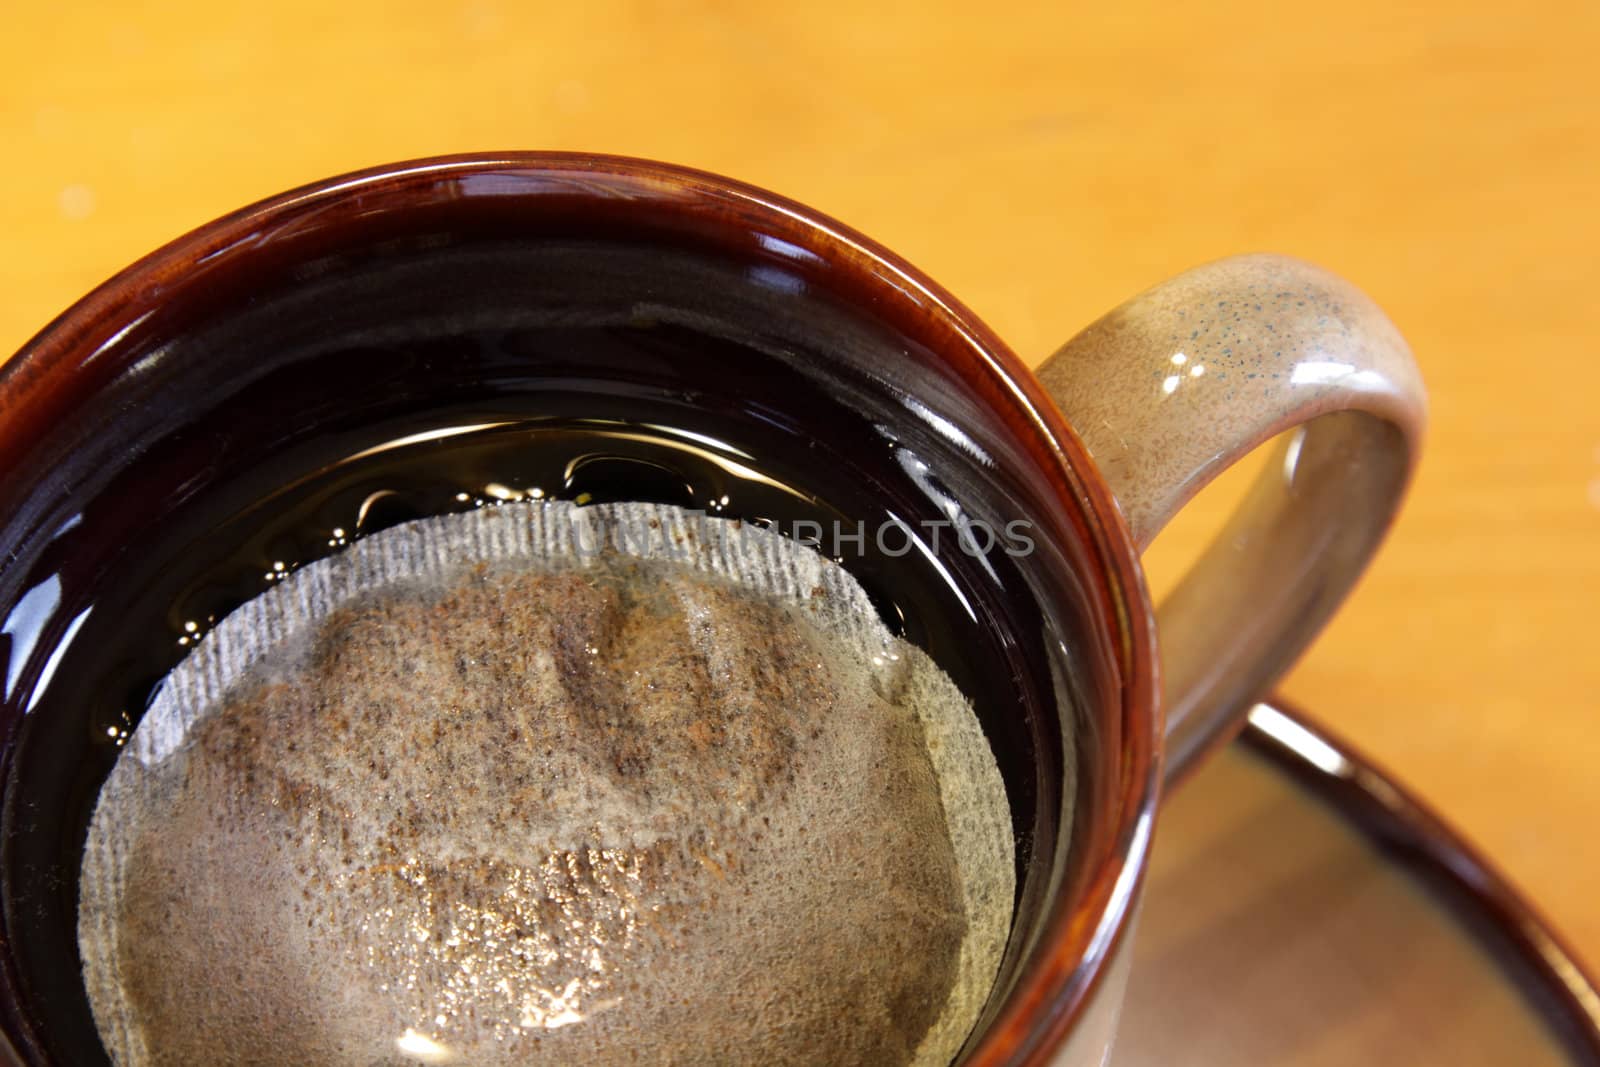 A bag of tea sitting a mug of hot water.